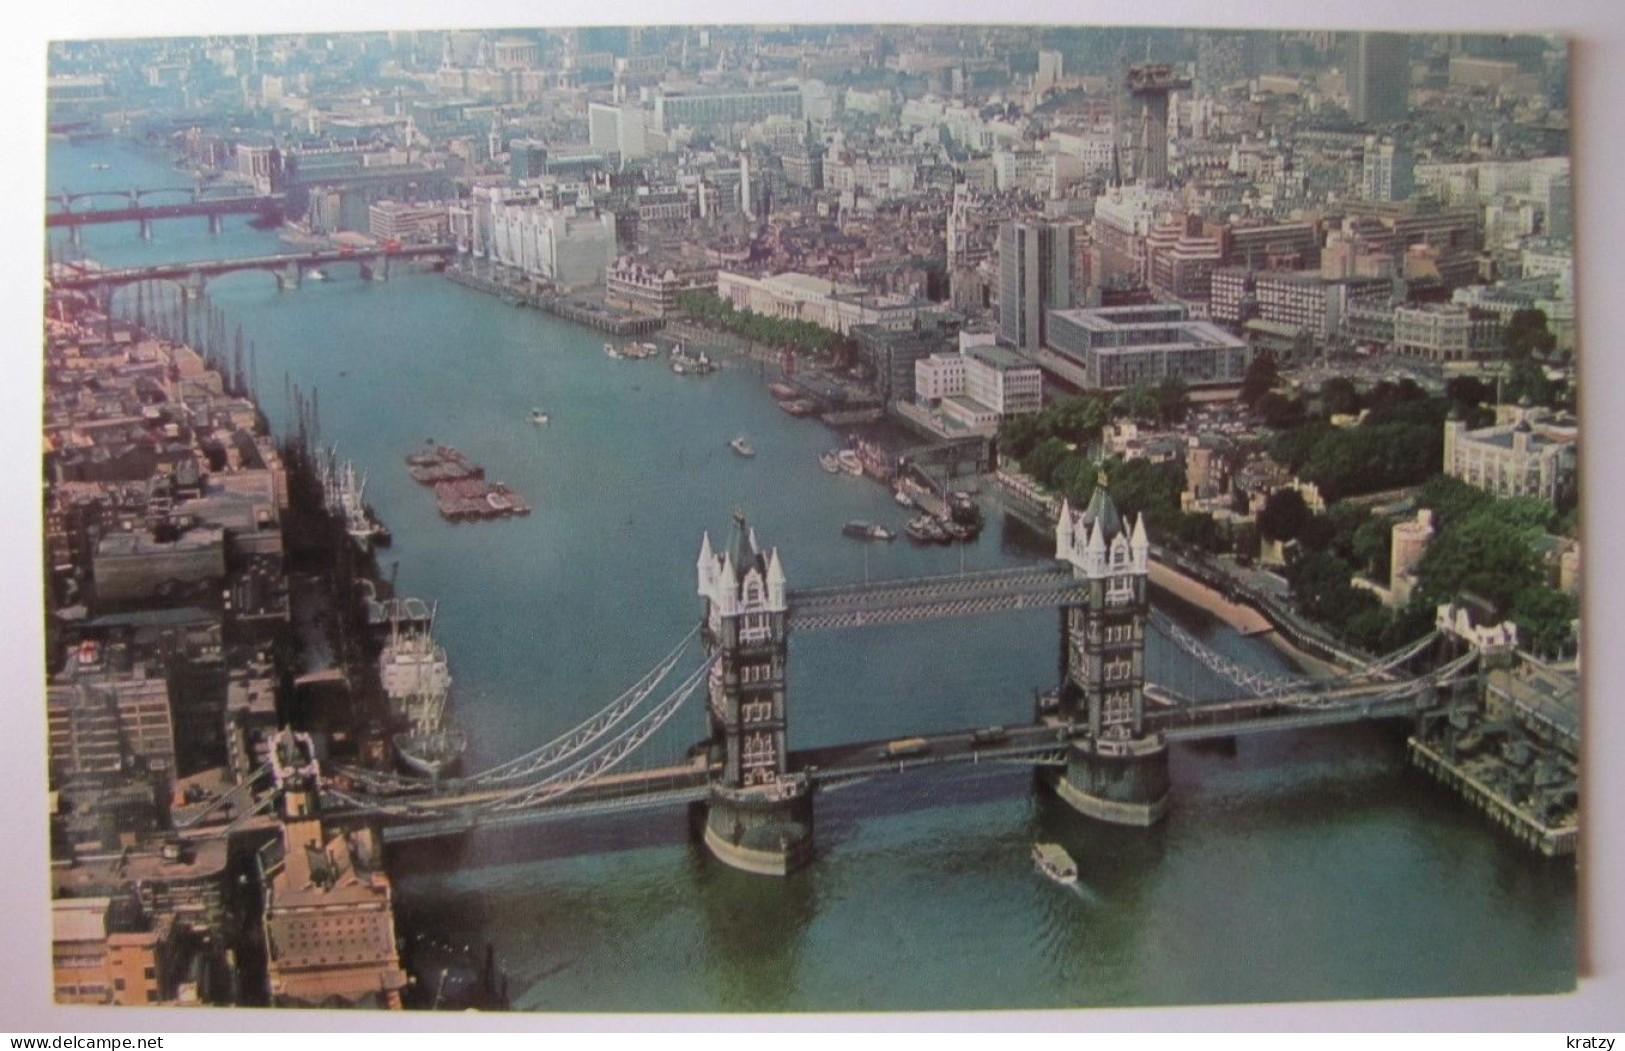 ROYAUME-UNI - ANGLETERRE - LONDON - Tower Bridge - Tower Of London